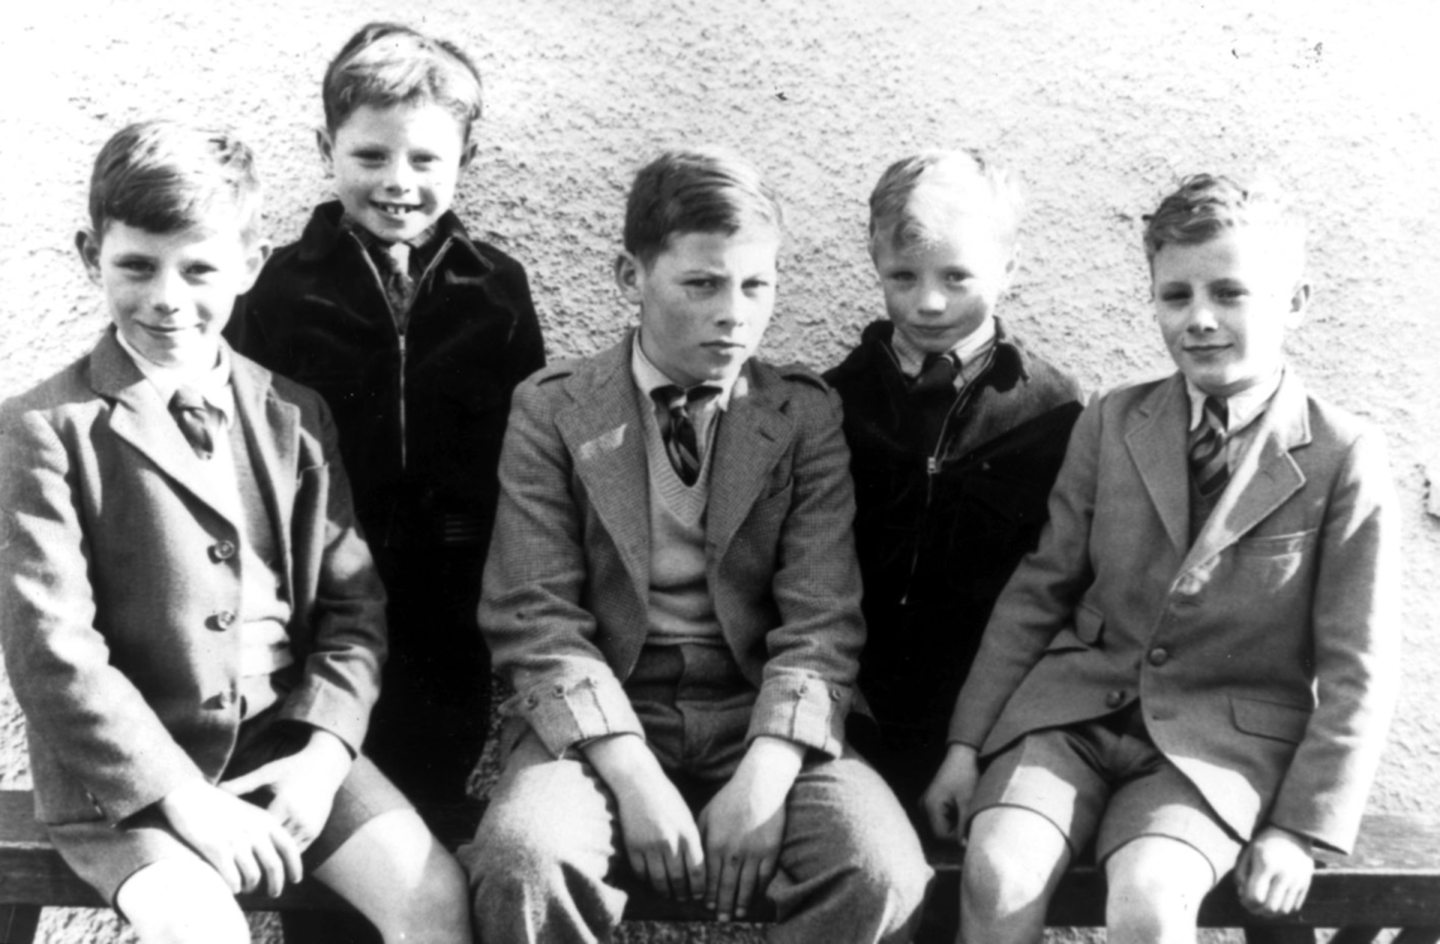 The five Milne boys outside Tough school in 1956: l-r Hamish, Stewart, Bill, Gordon and Sandy.